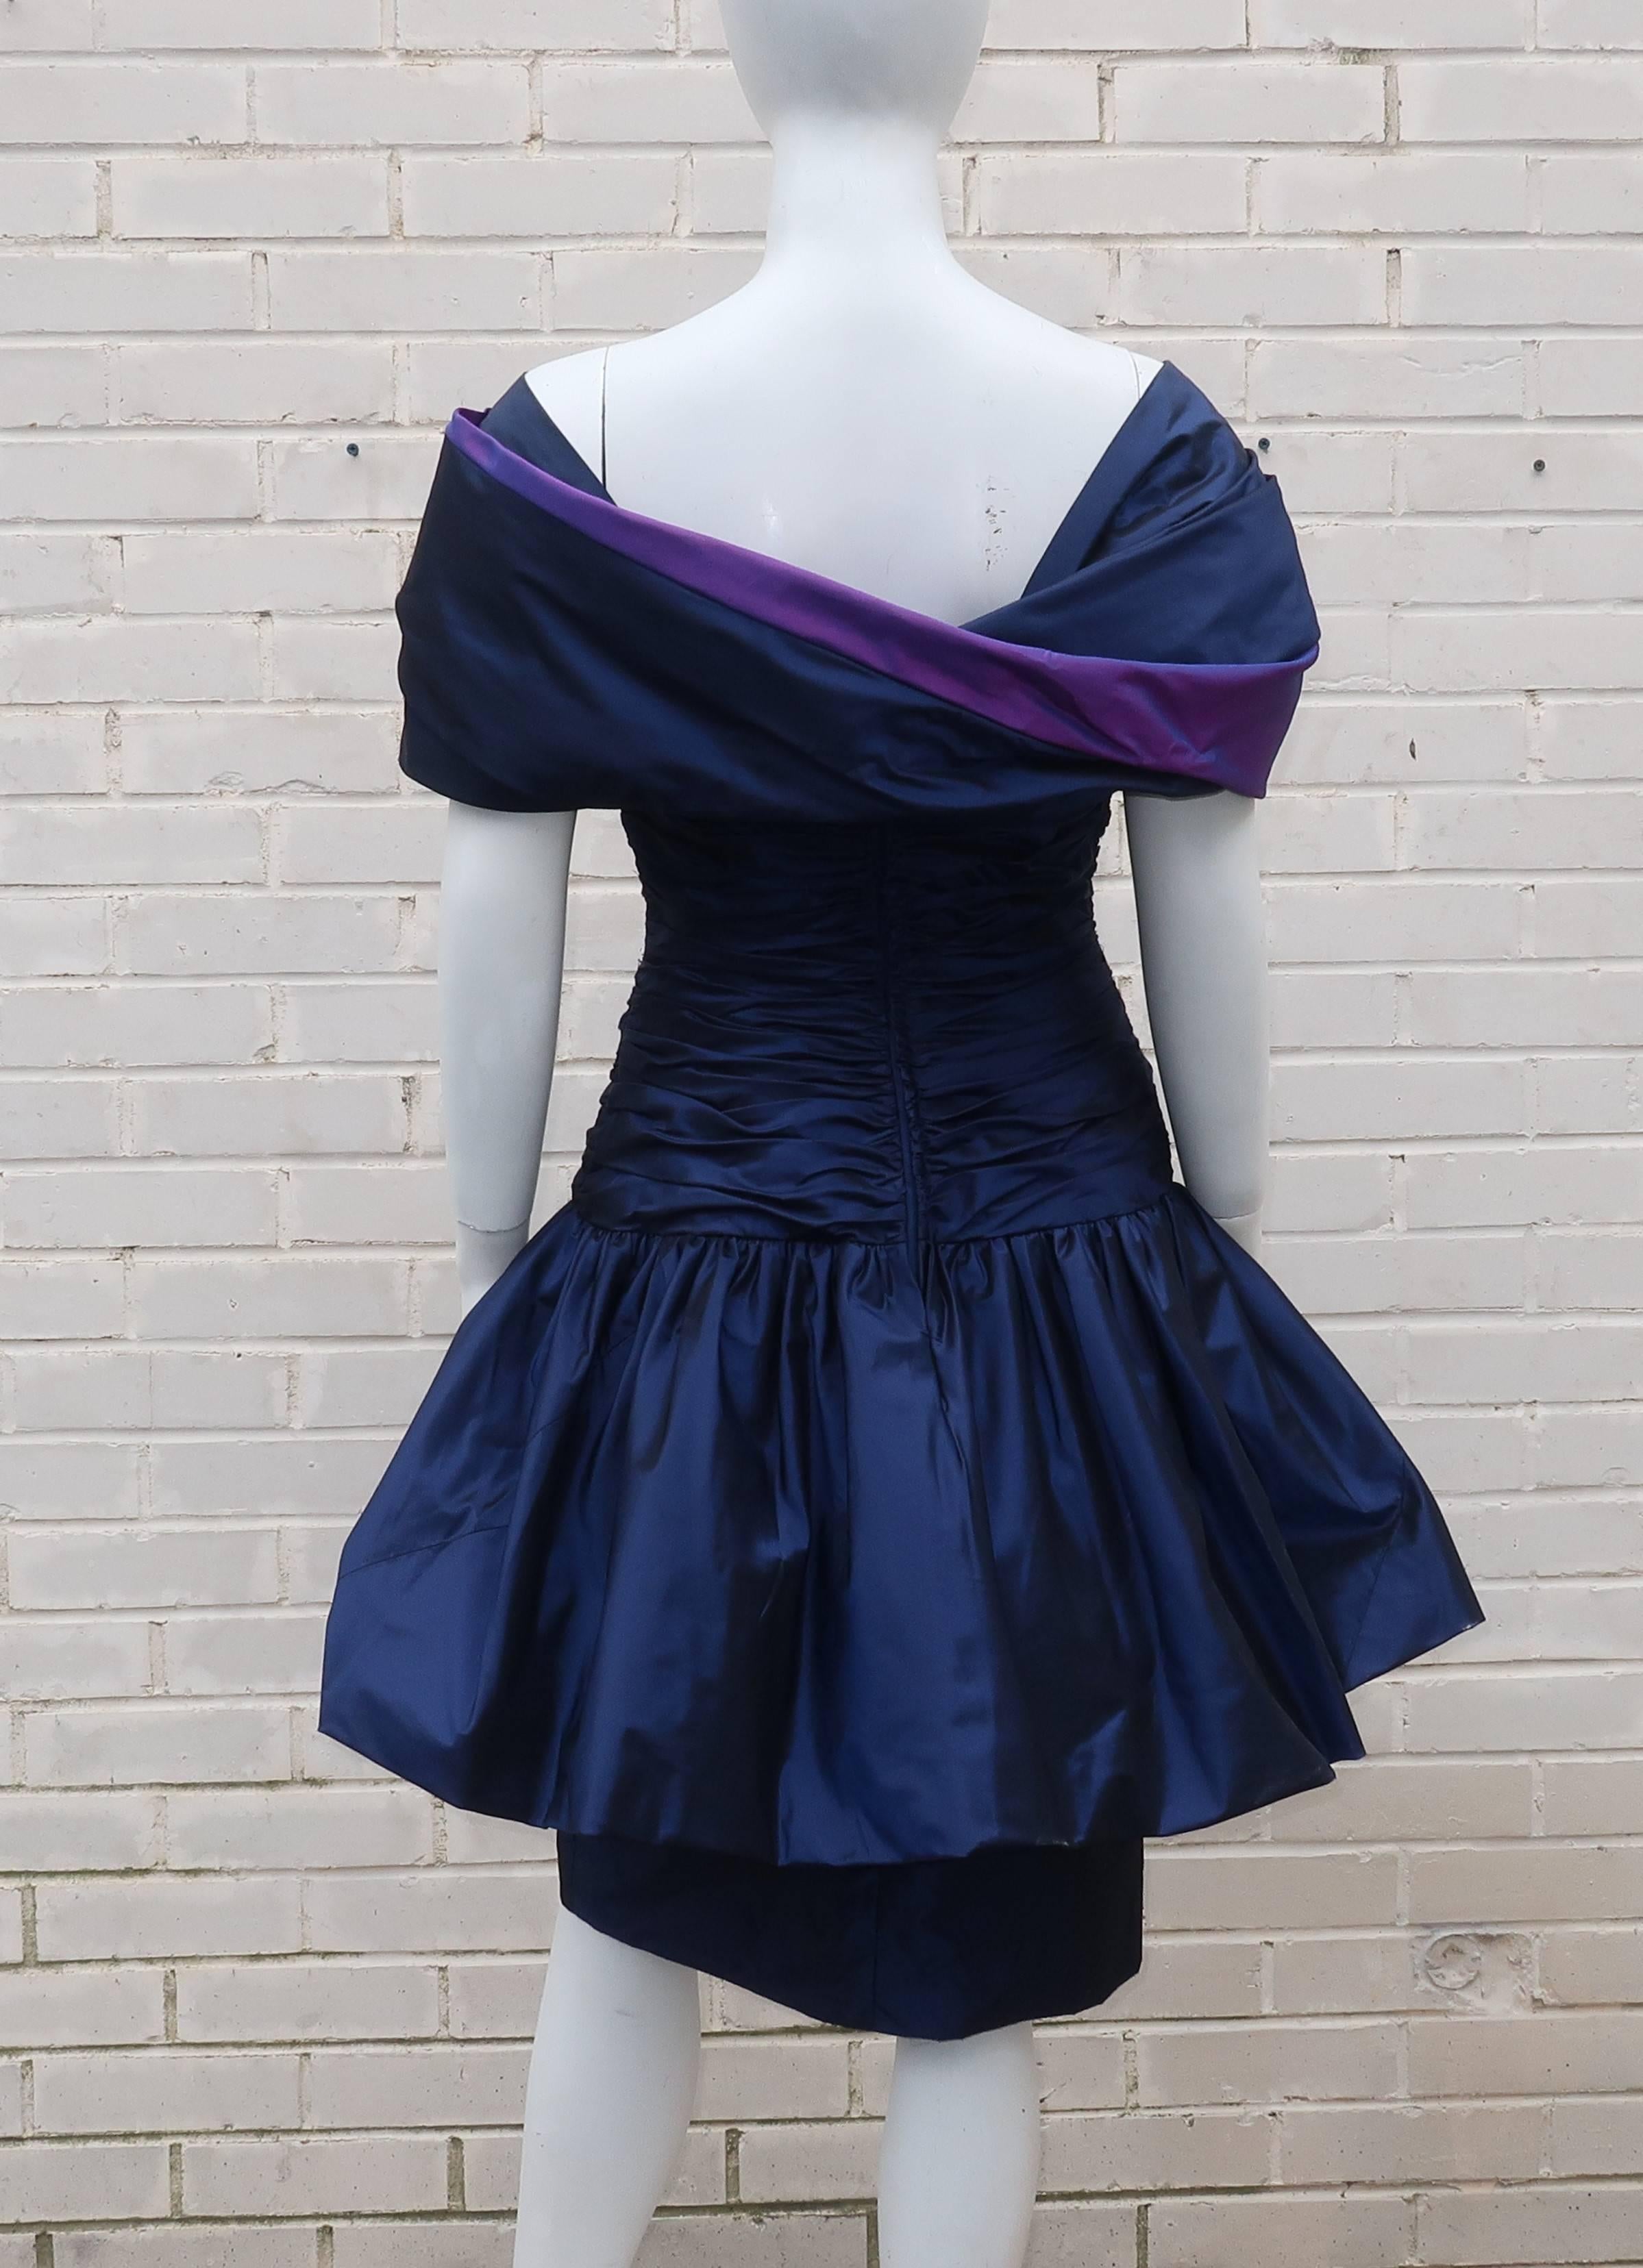 Mignon Blue Taffeta Dress With Dramatic Shoulder Drape, 1980s  1